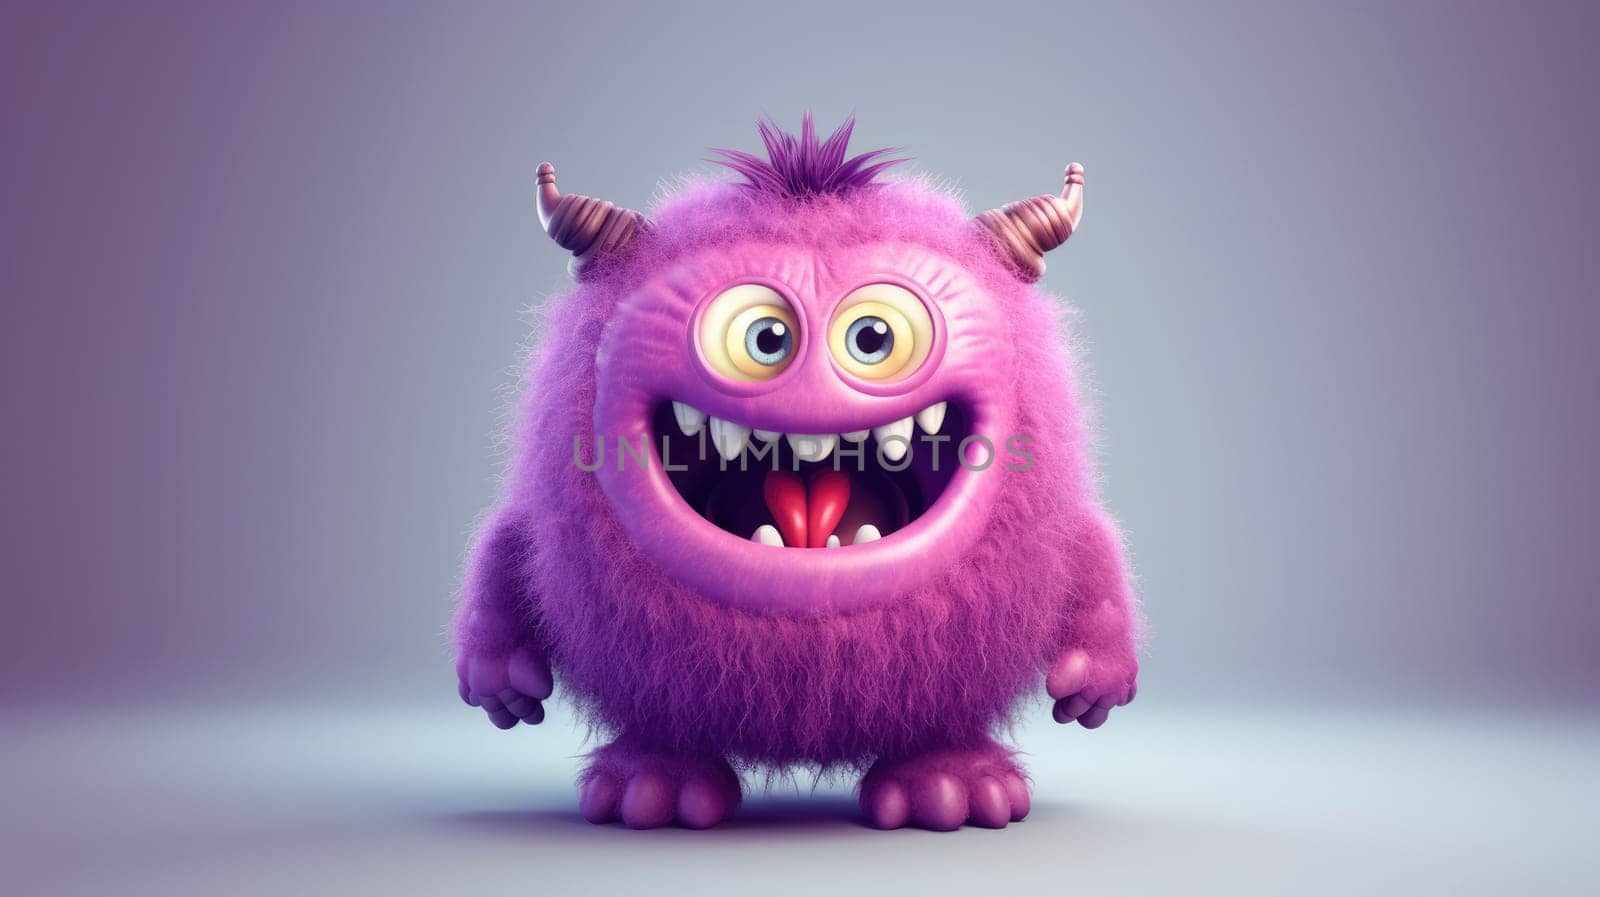 Cute Furry fluffy Pink Monster, cartoon 3d, alien monster illustration, on purple background. by JuliaDorian